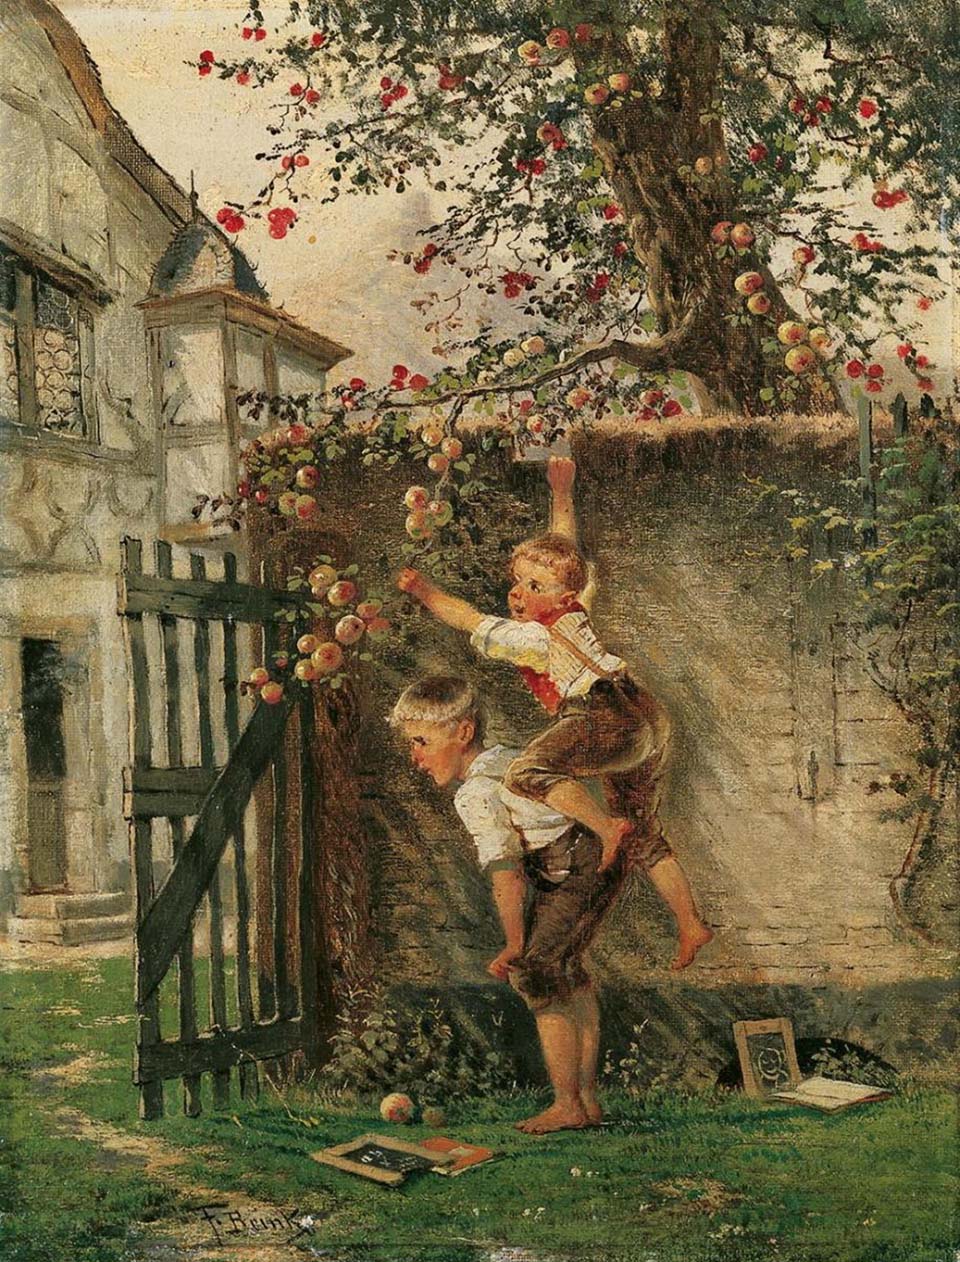 Two school boys stealing apples